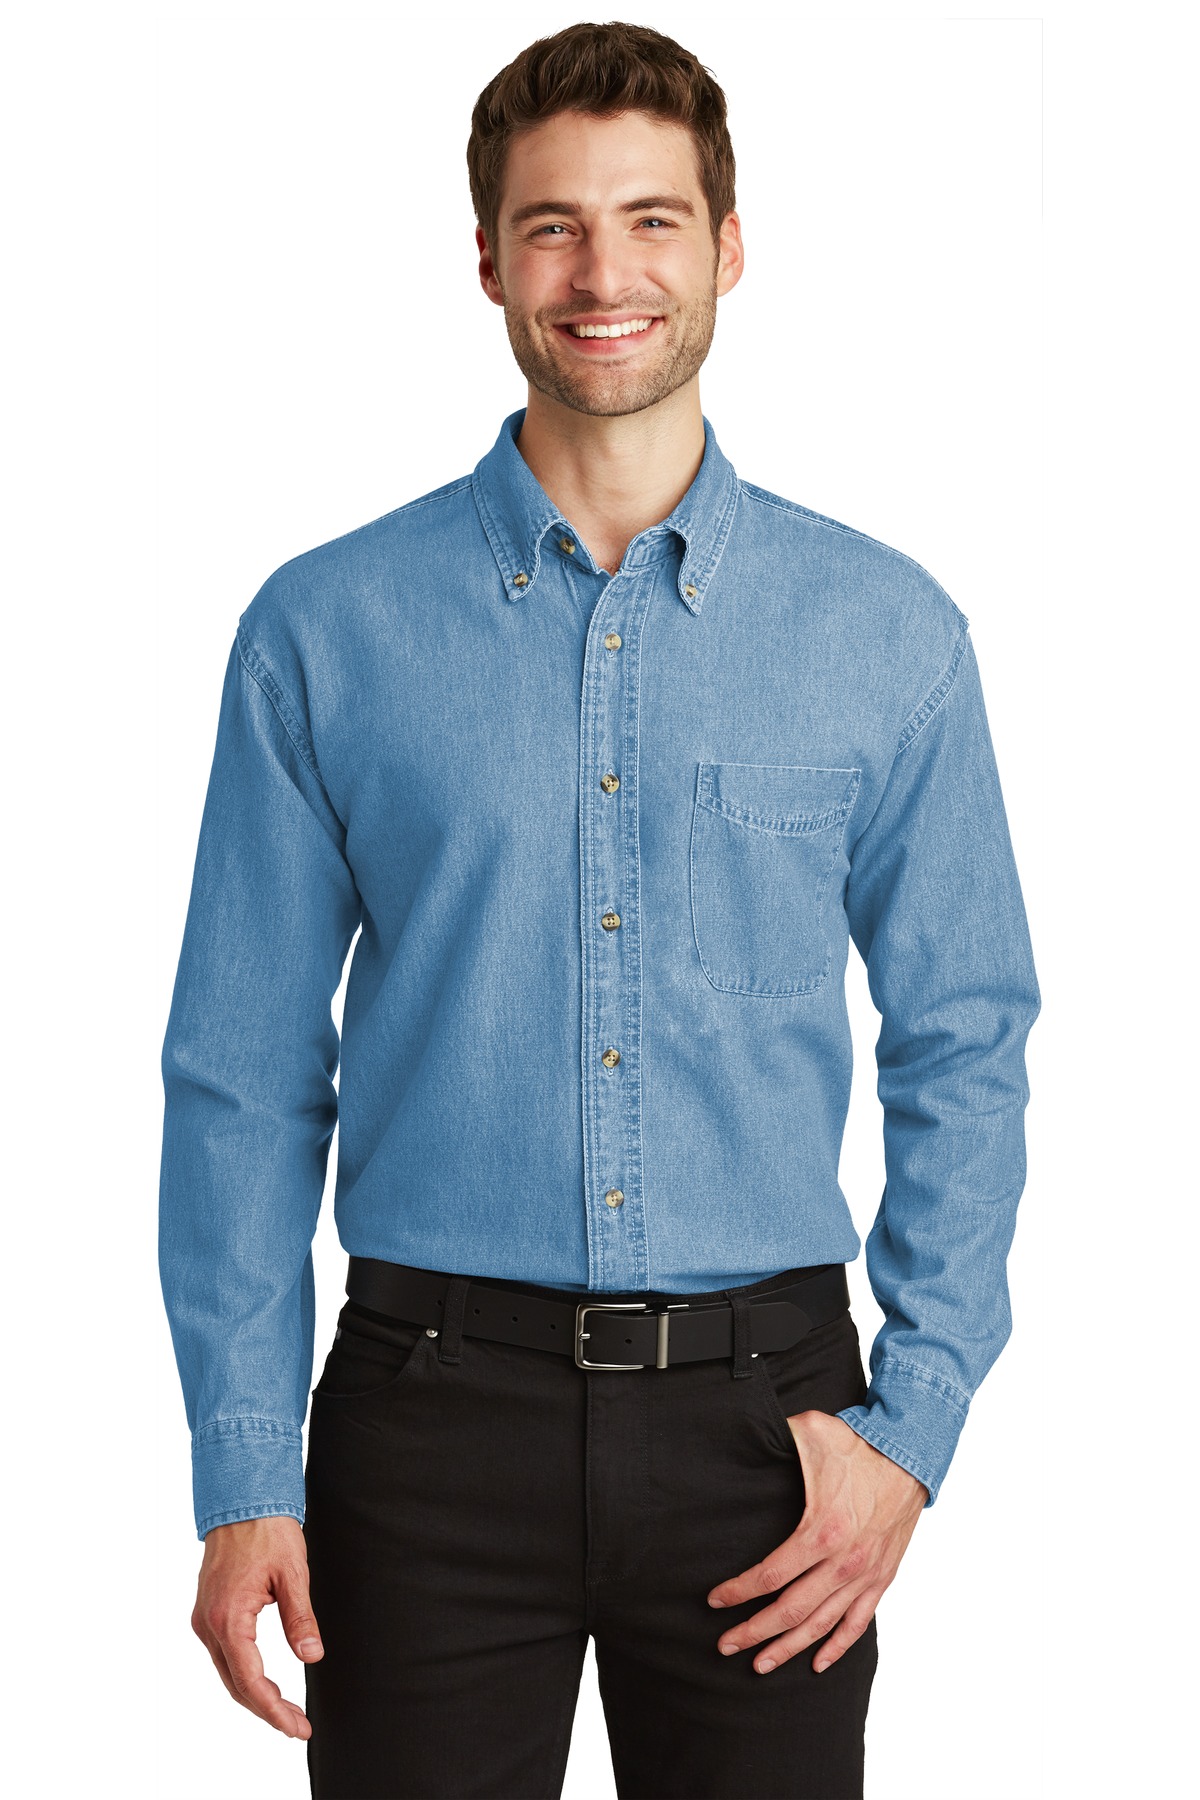 Port Authority Woven Shirts for Hospitality ® Long Sleeve Denim Shirt.-Port Authority